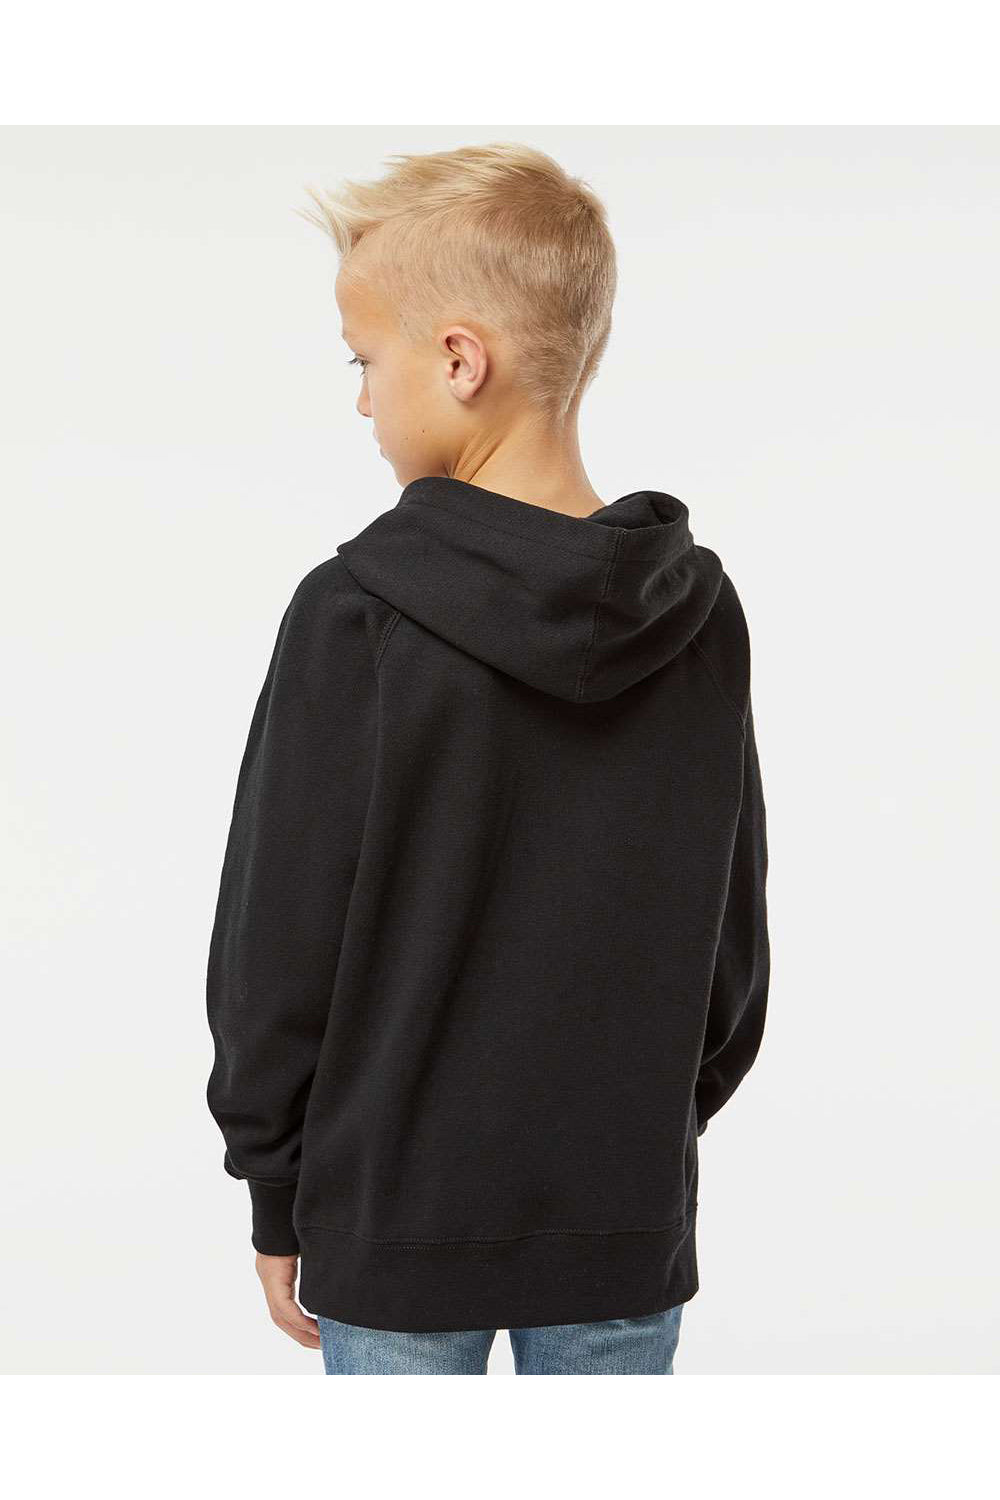 Independent Trading Co. PRM15YSB Youth Special Blend Raglan Hooded Sweatshirt Hoodie Black Model Back